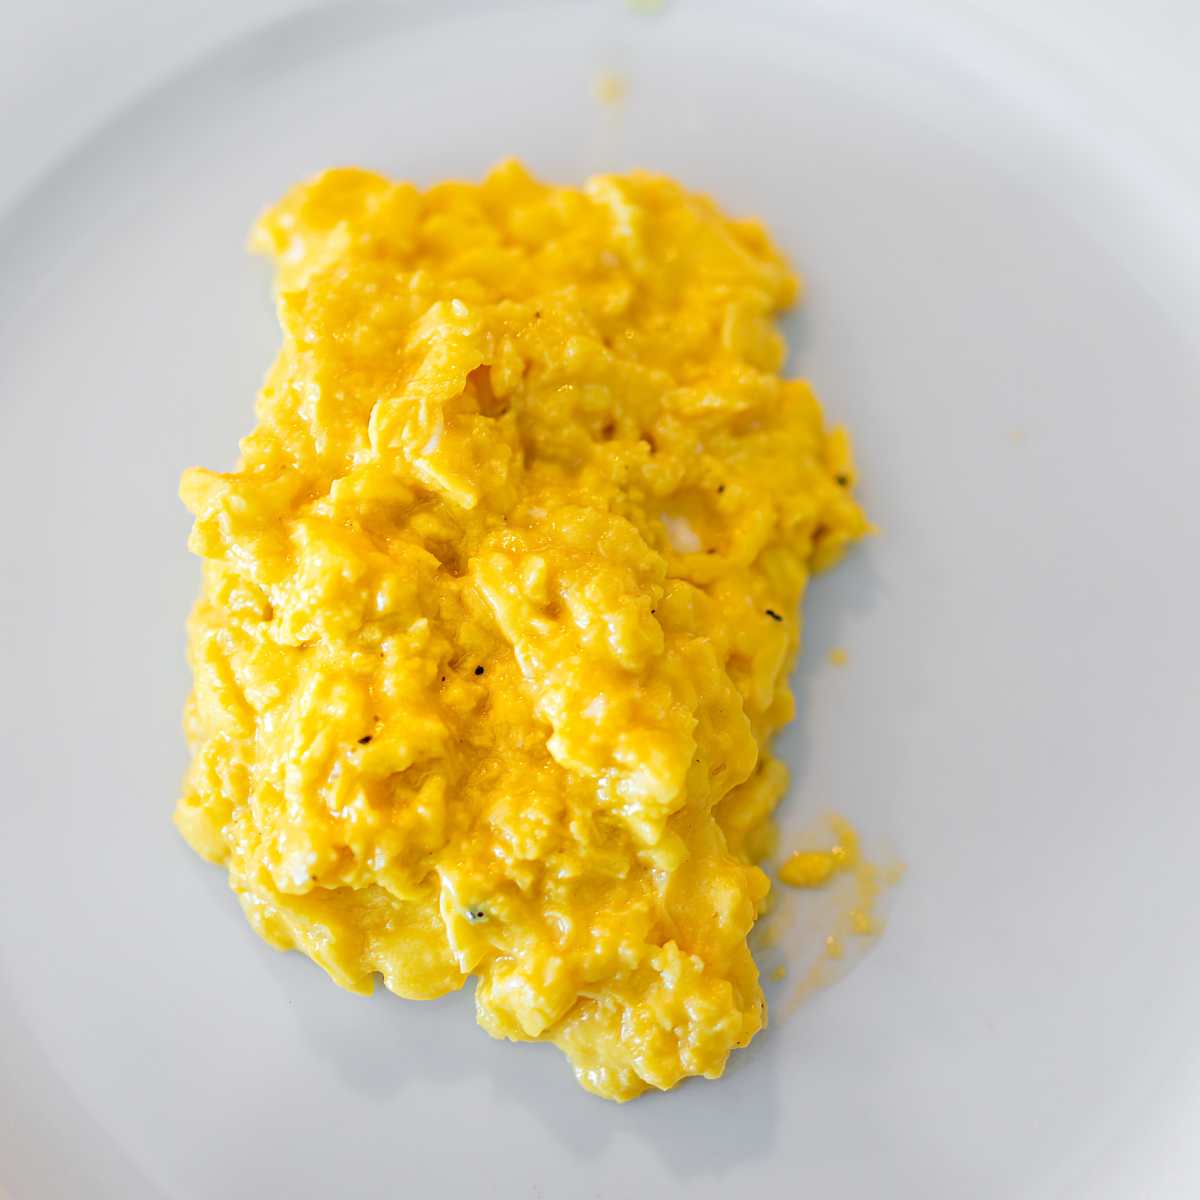 Creamy scrambled eggs on a plate.